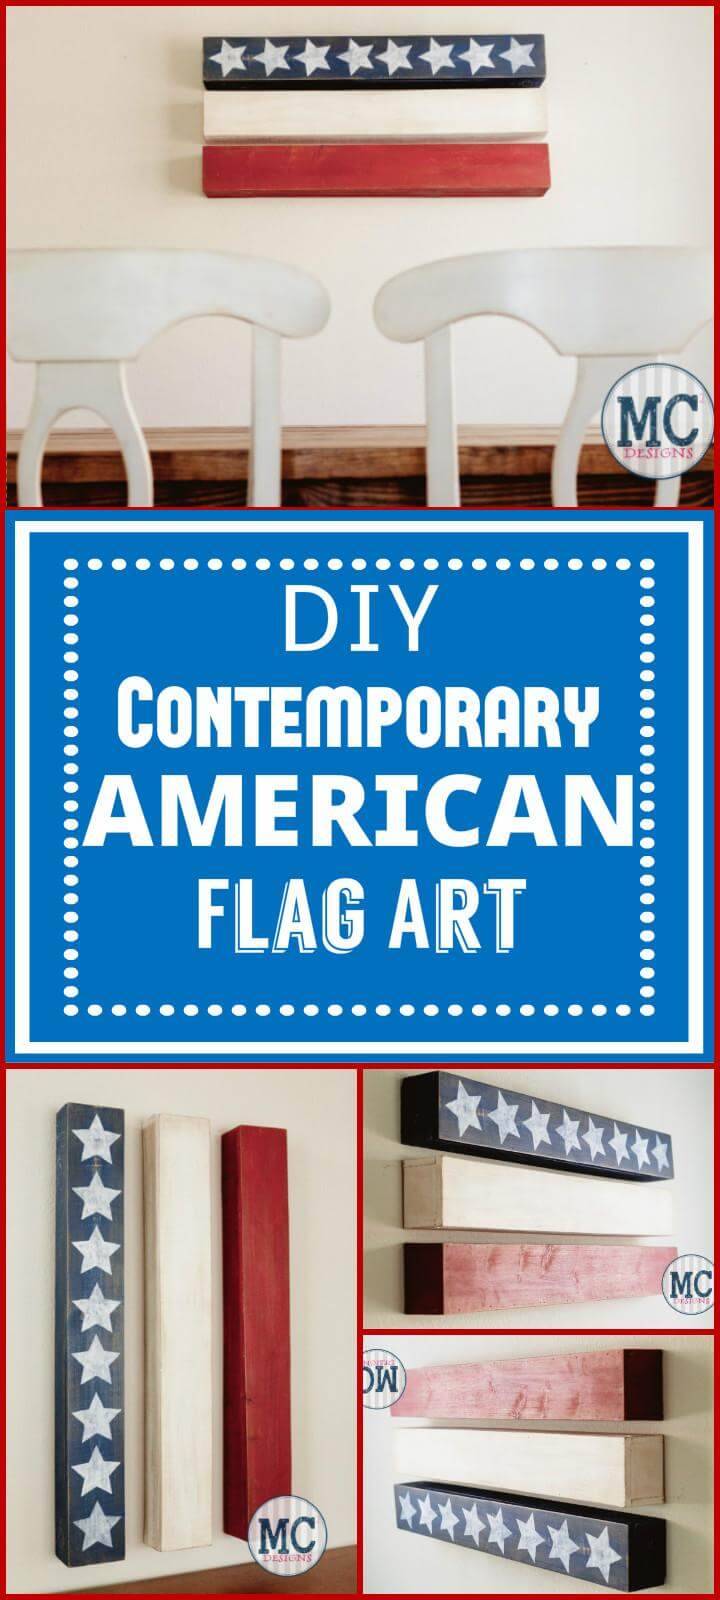 DIY contemporary American flag art